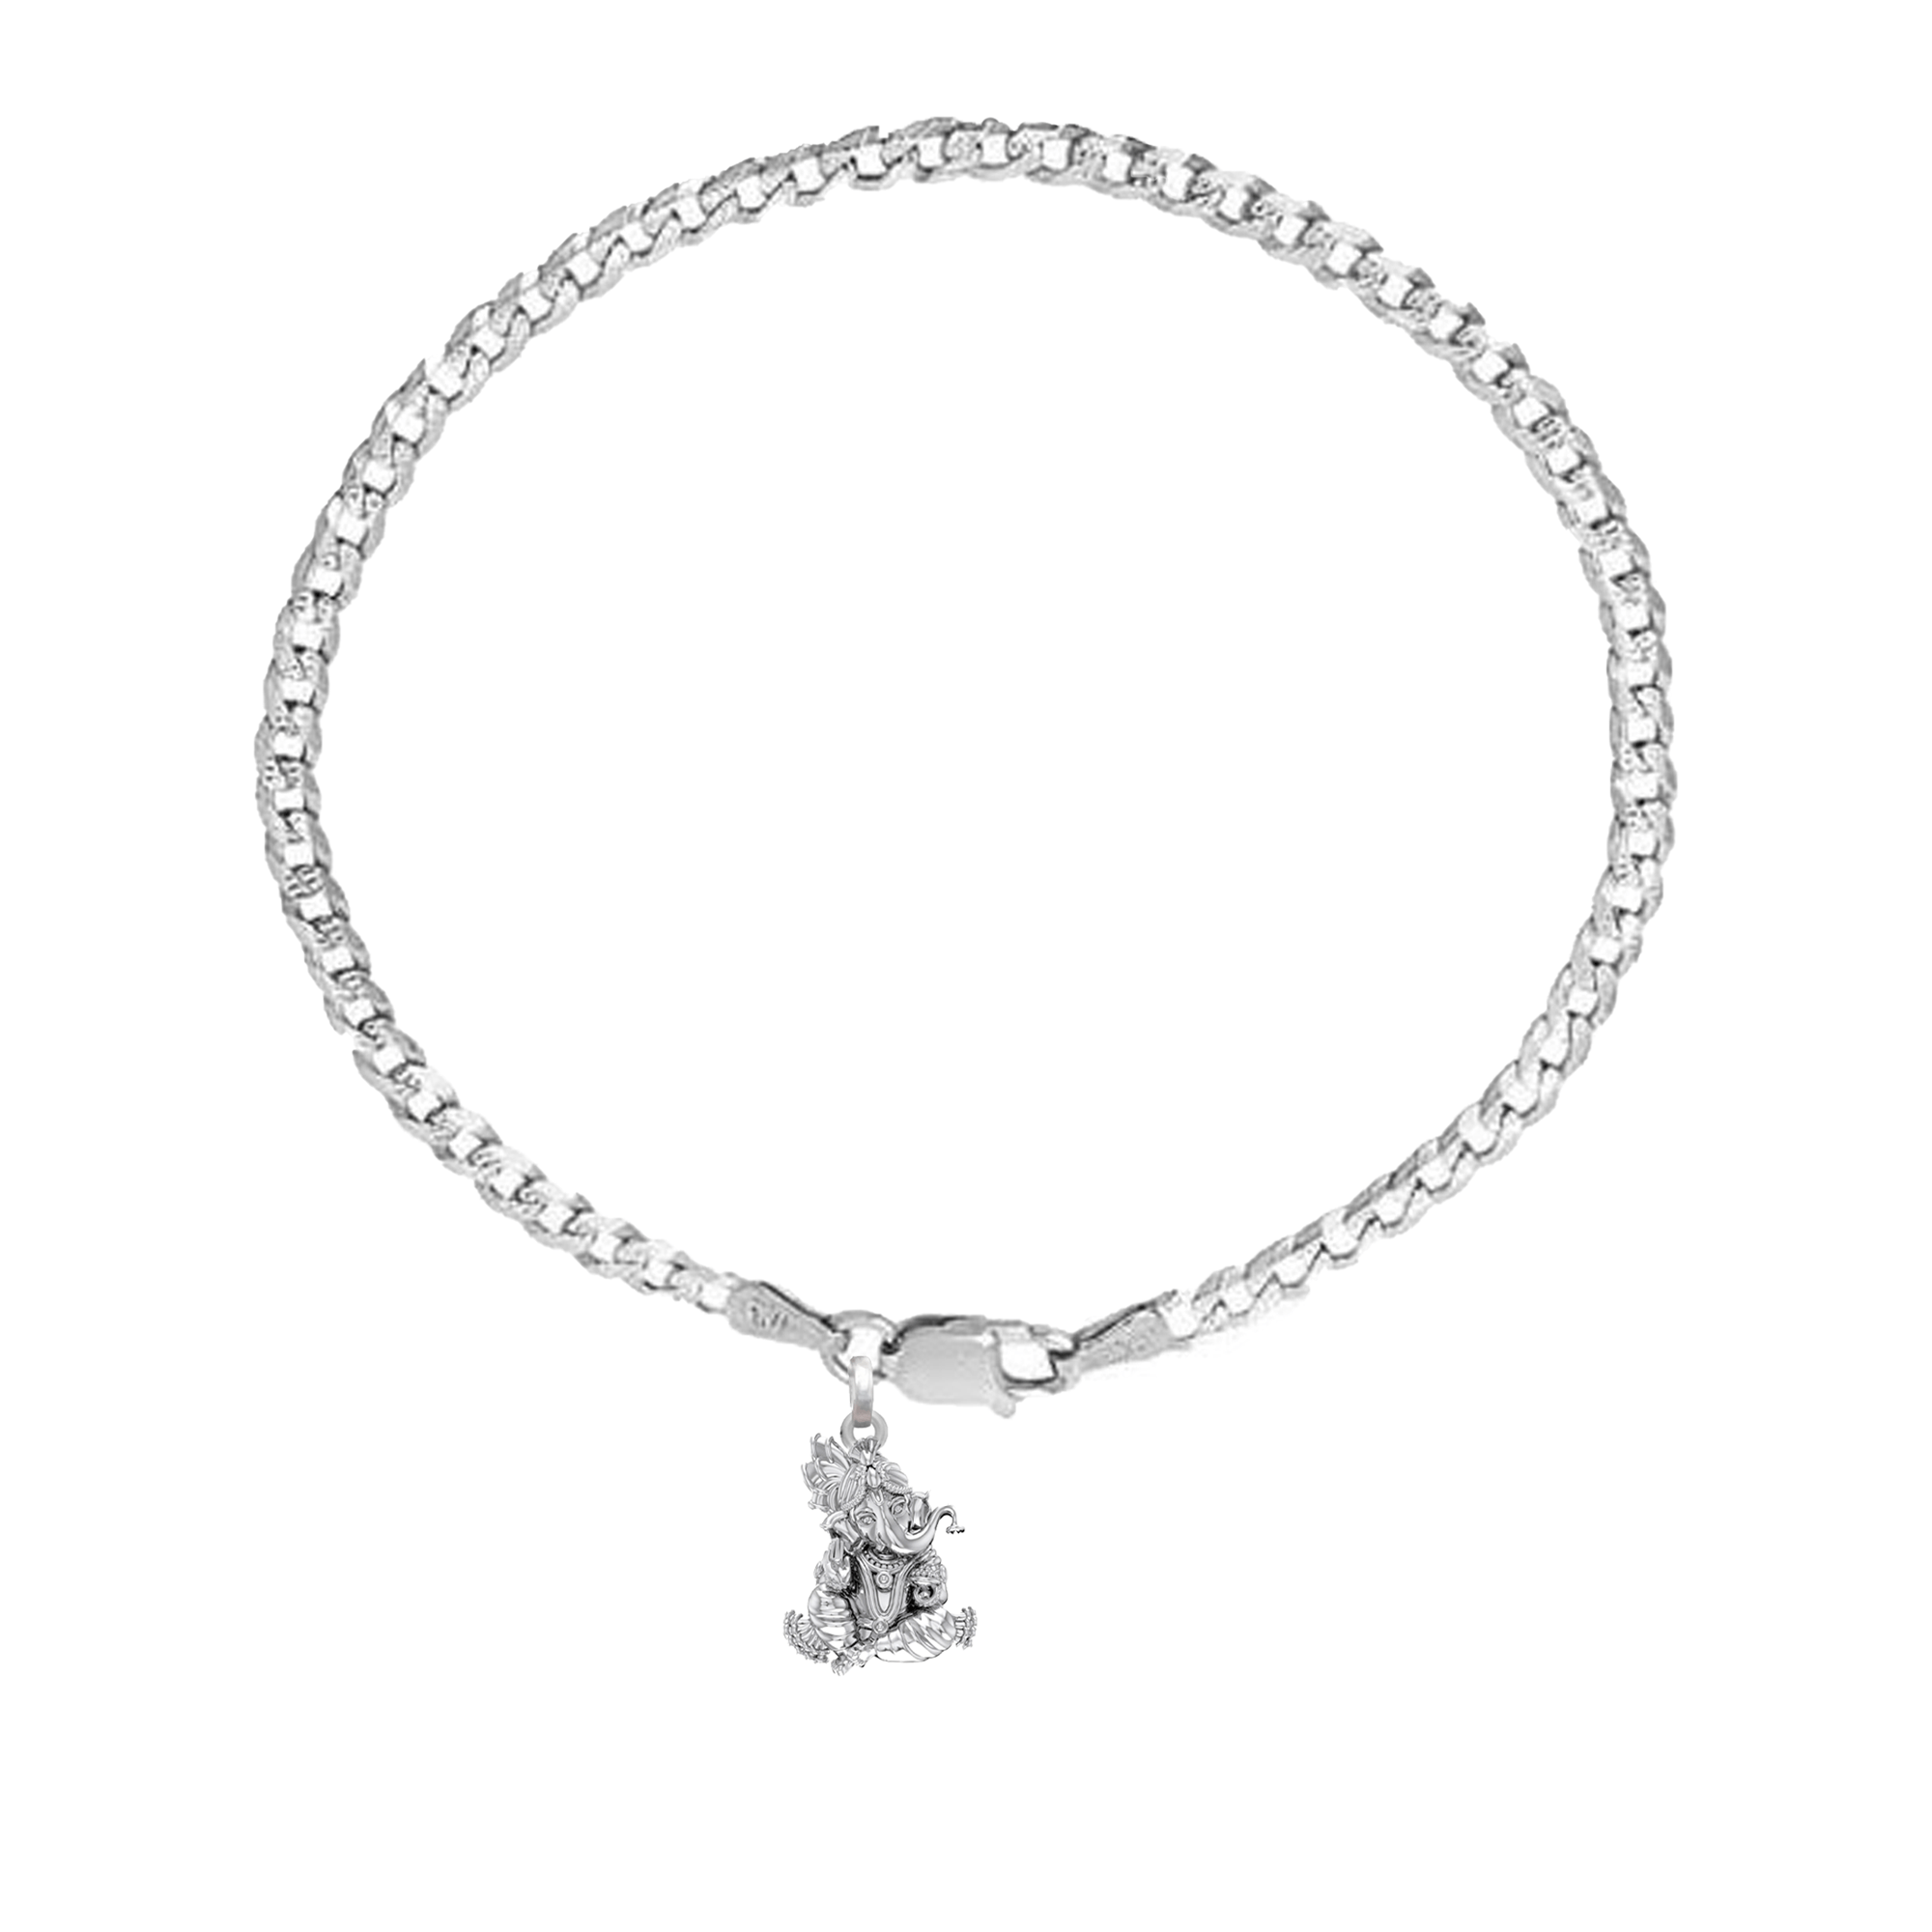 Akshat Sapphire 92.5% pure Sterling Silver Curb Designer Bracelet with Charm Ganesh for Men & Boys